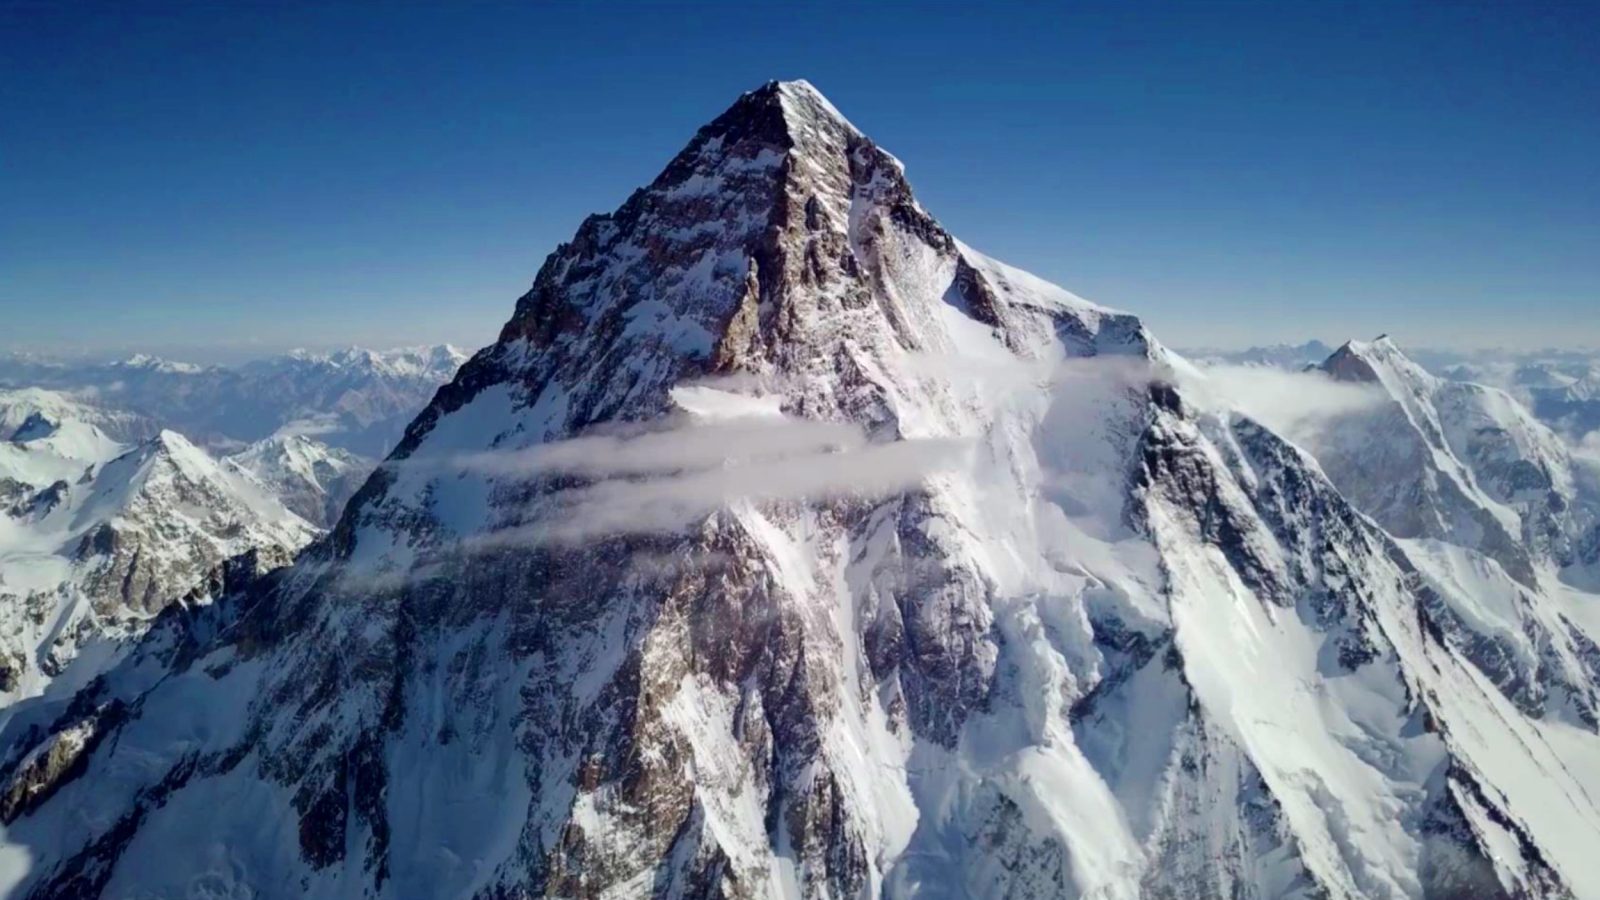 DJI Mavic Pro takes photo of K2 mountain at 8,400m or 27,600 feet high!